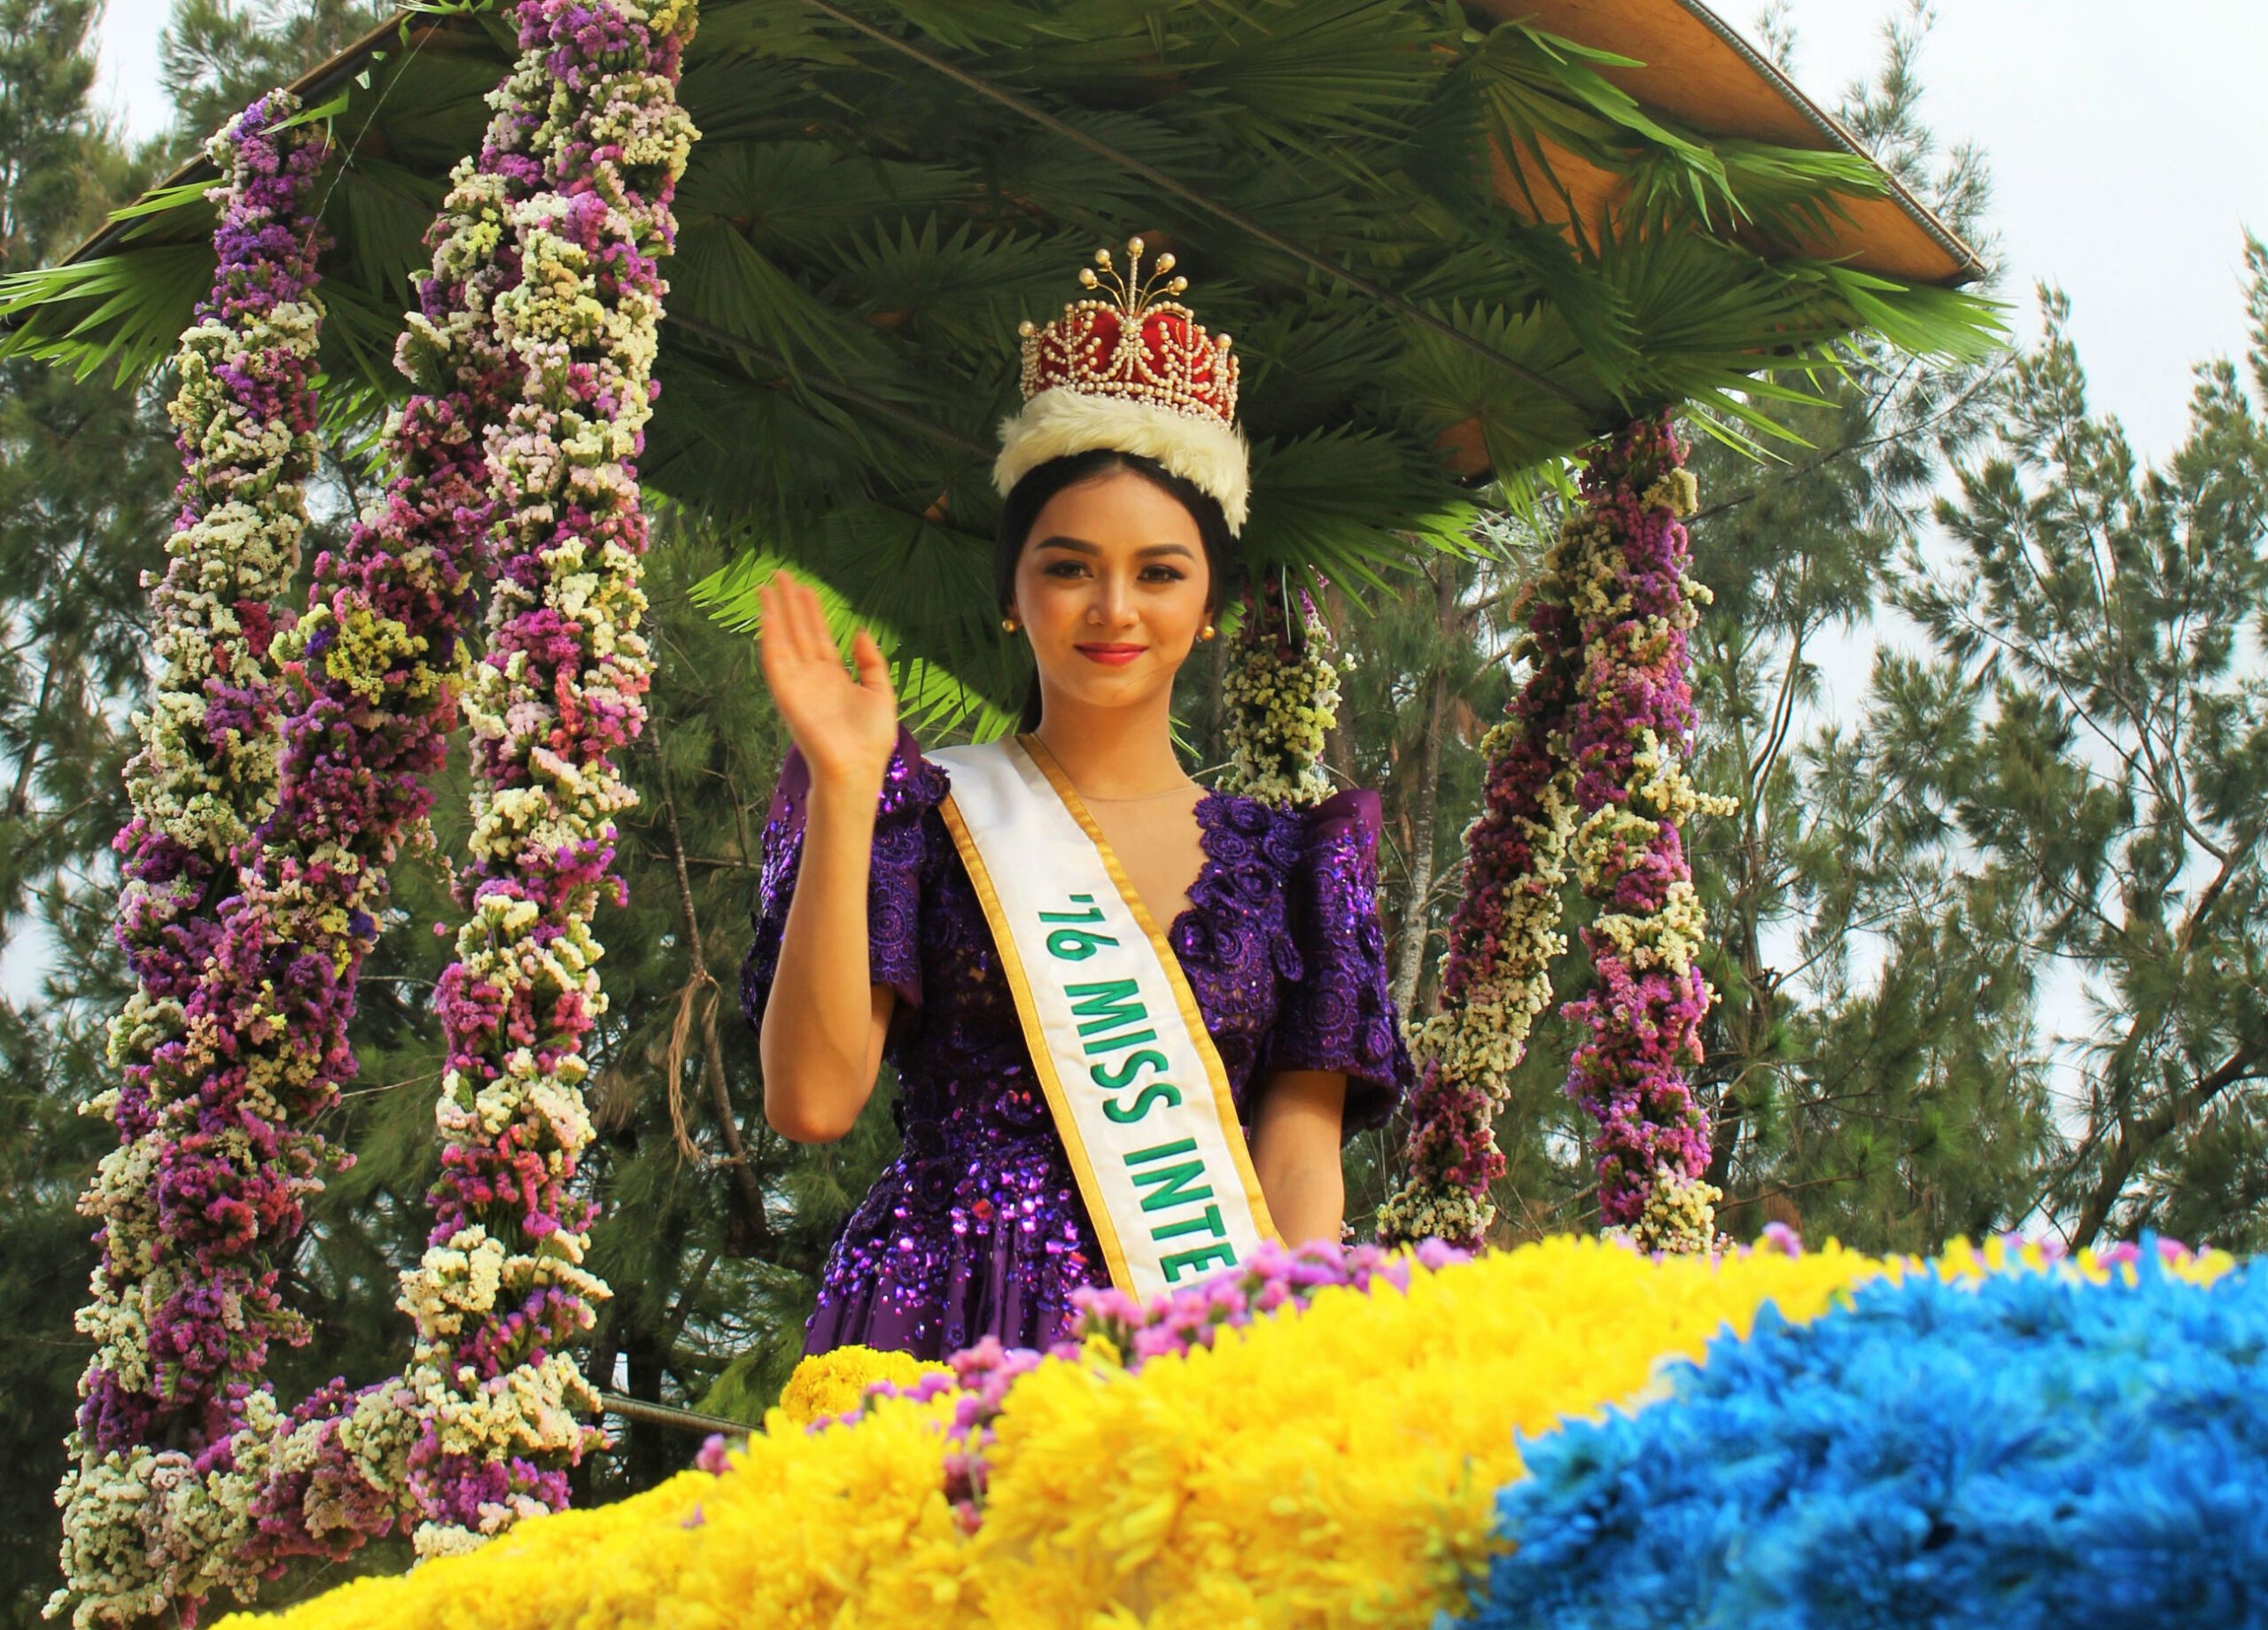 Baguio City celebrates Miss International 2016 Kylie Verzosa’s homecoming